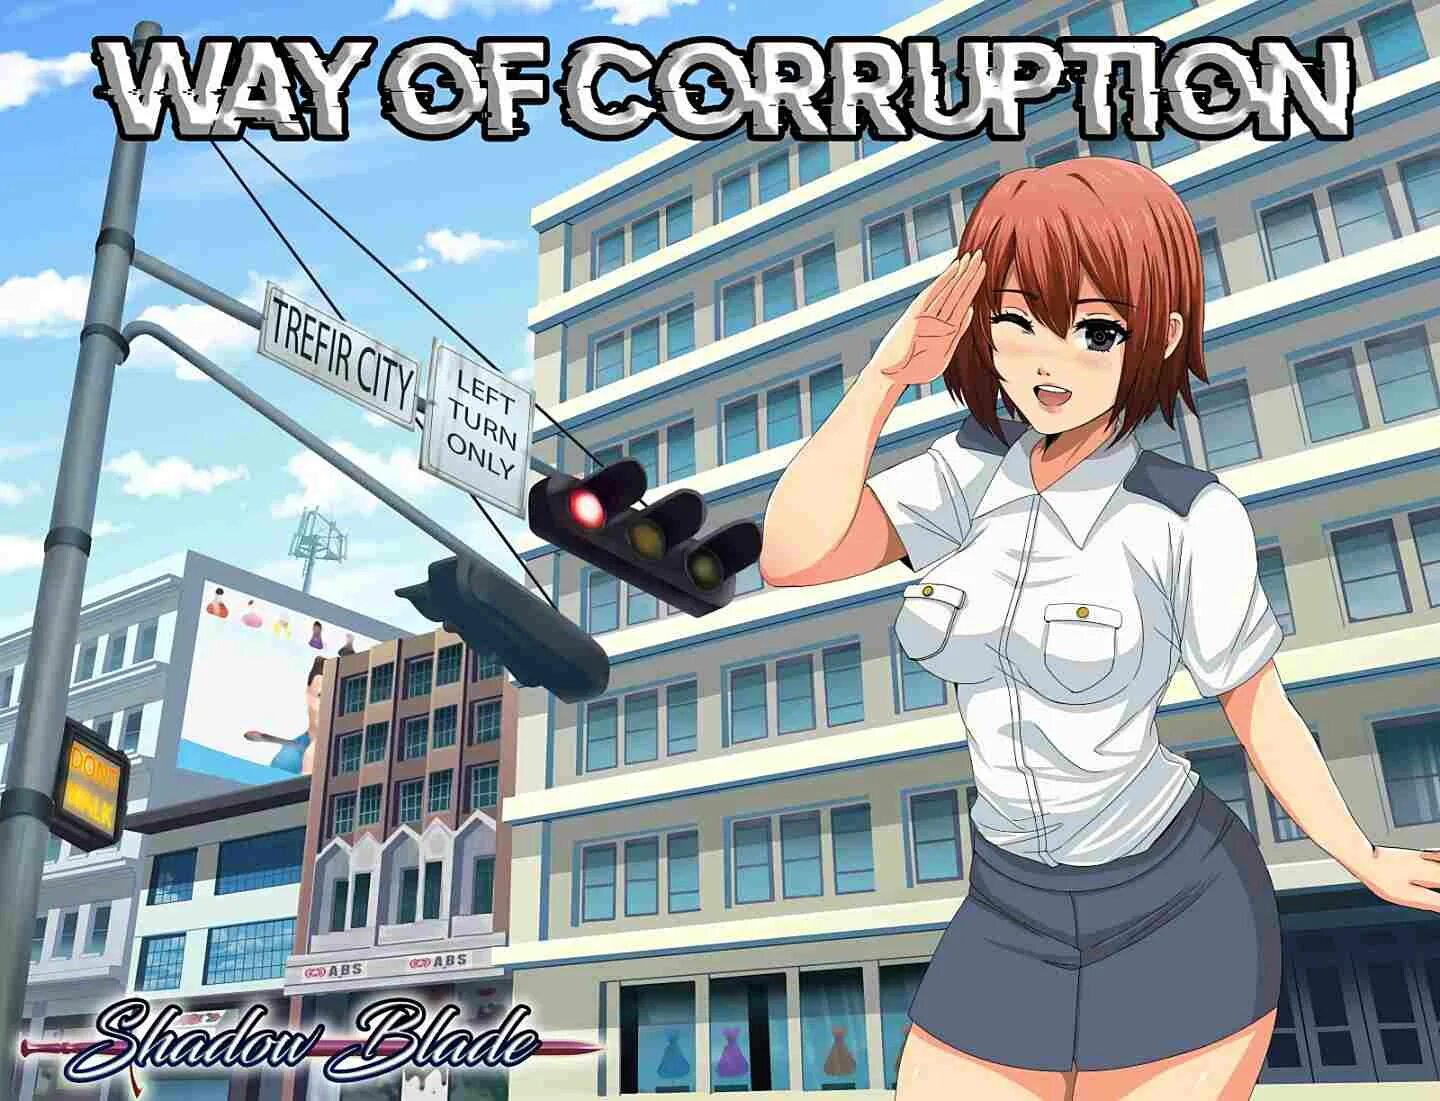 Corruption v. Way of corruption. Corruption игра. Agency of corruption игра. H-game коррупция.